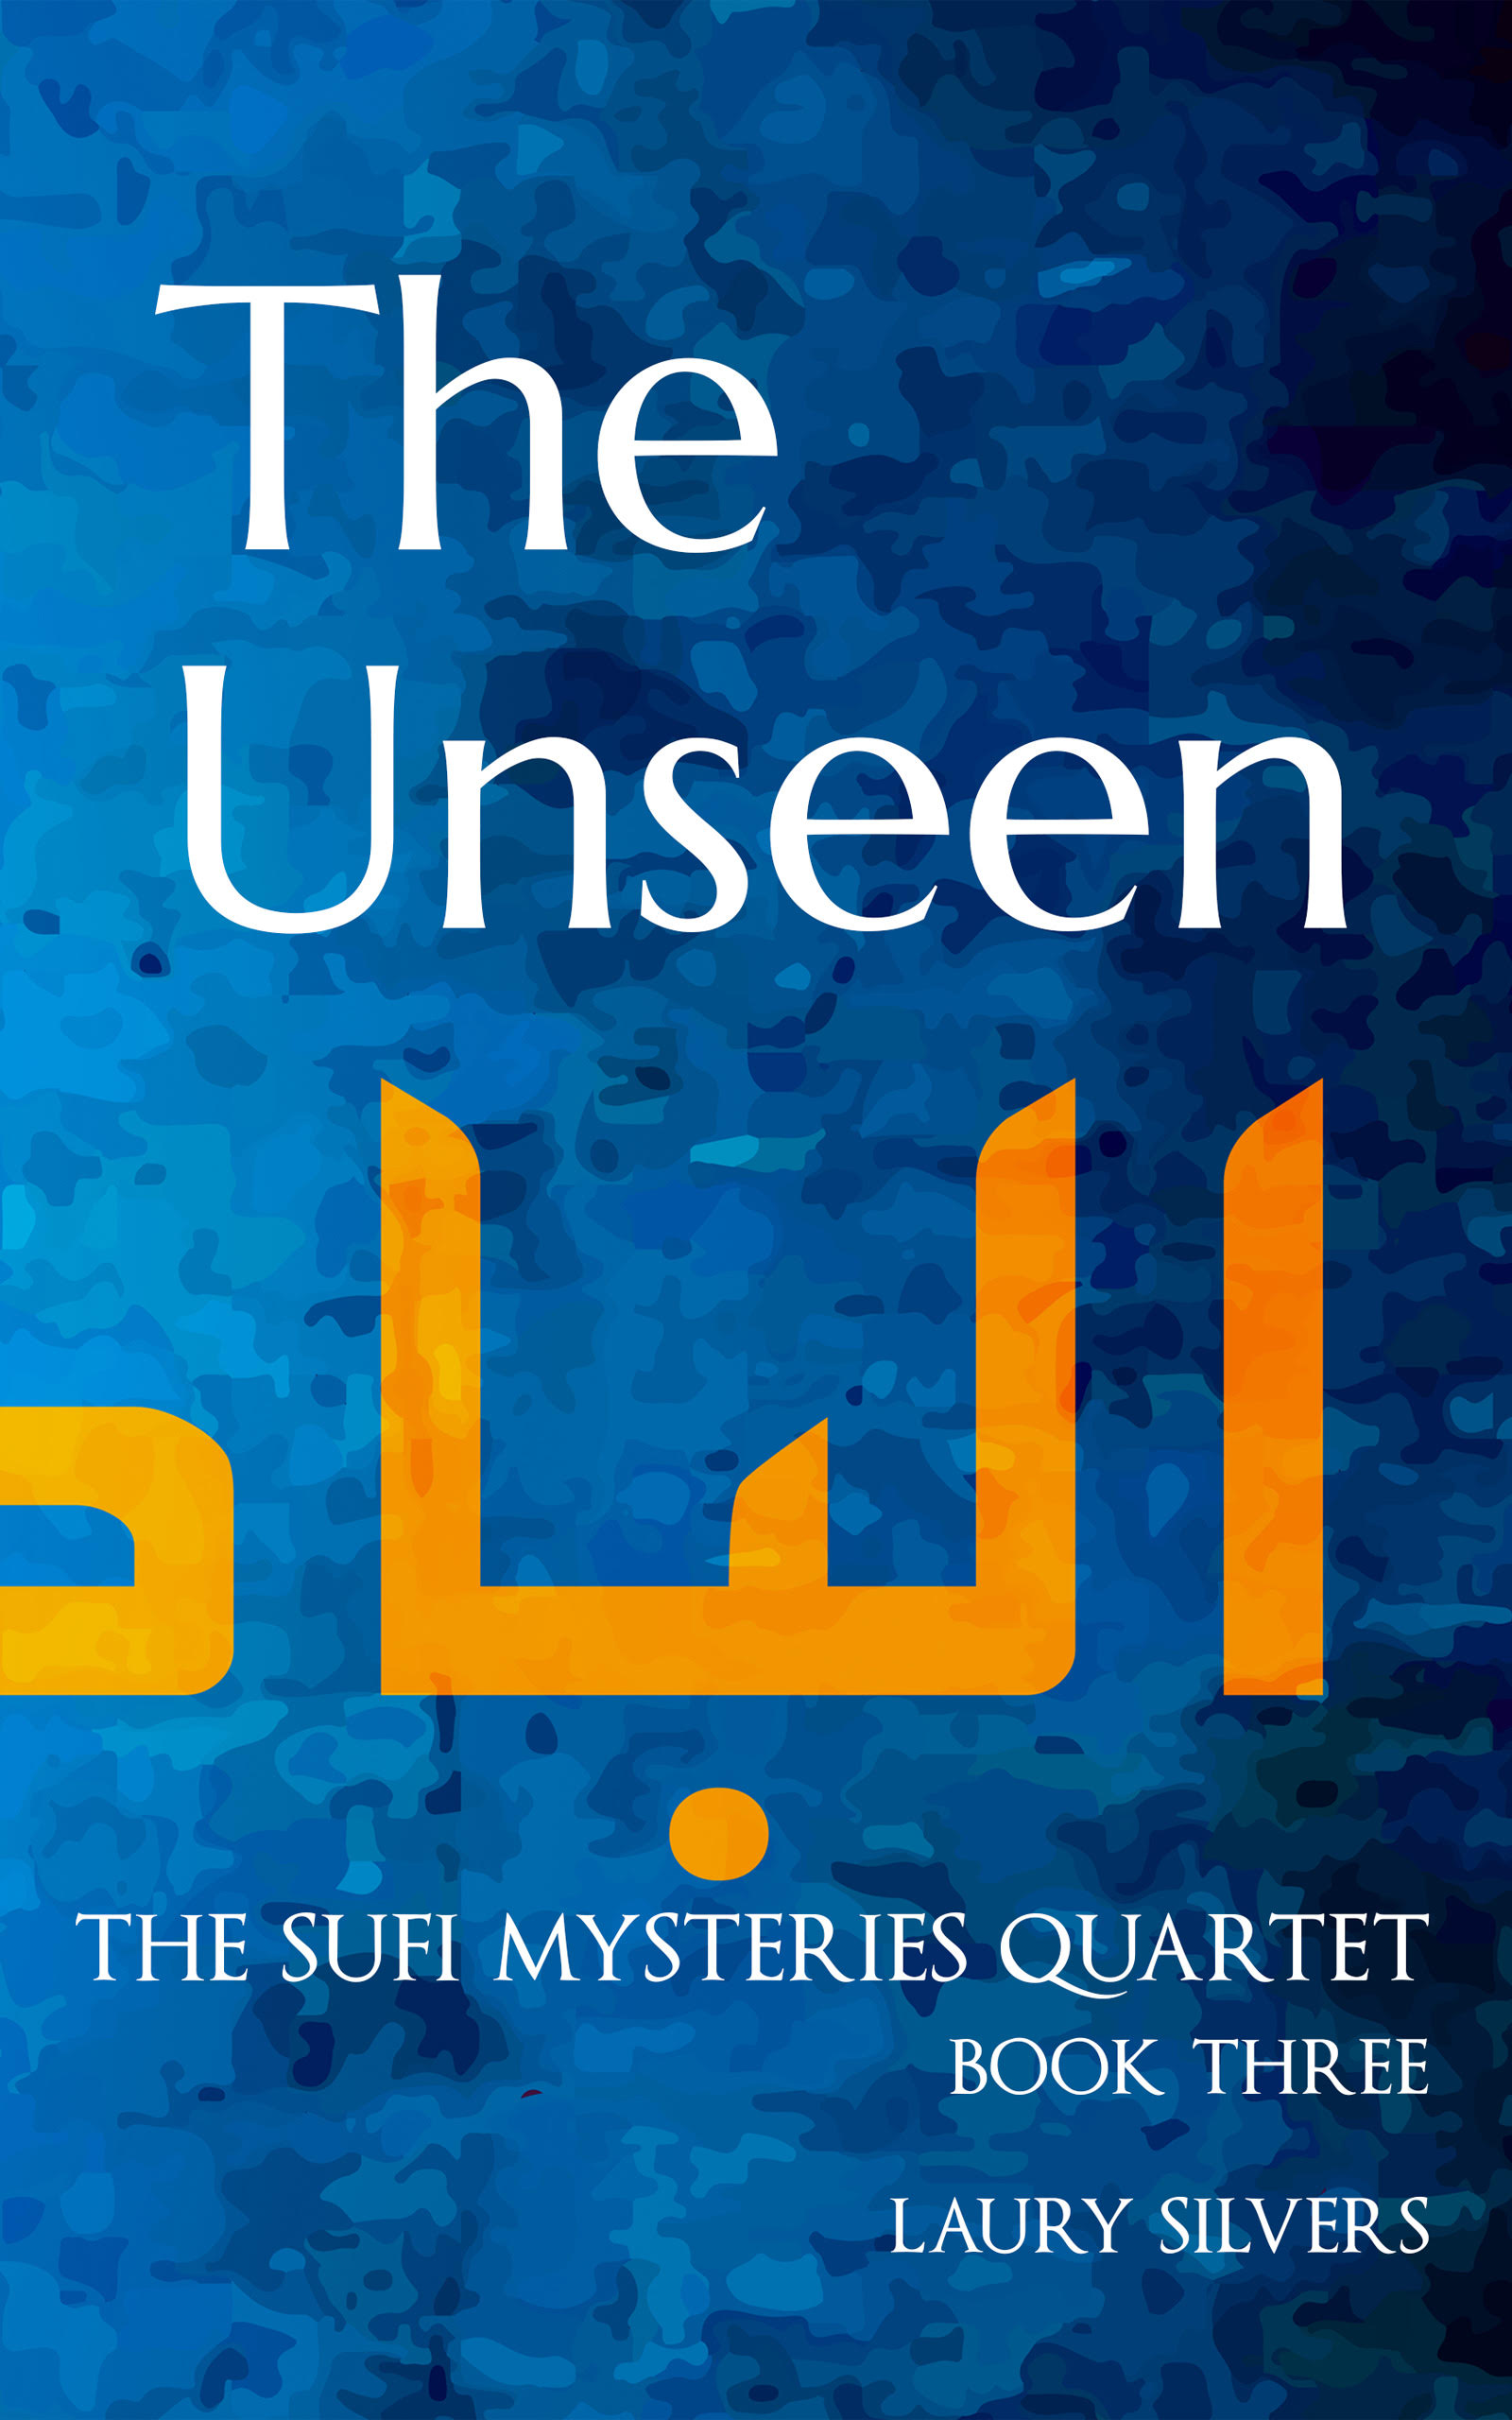 The Sufi Mysteries Quartet